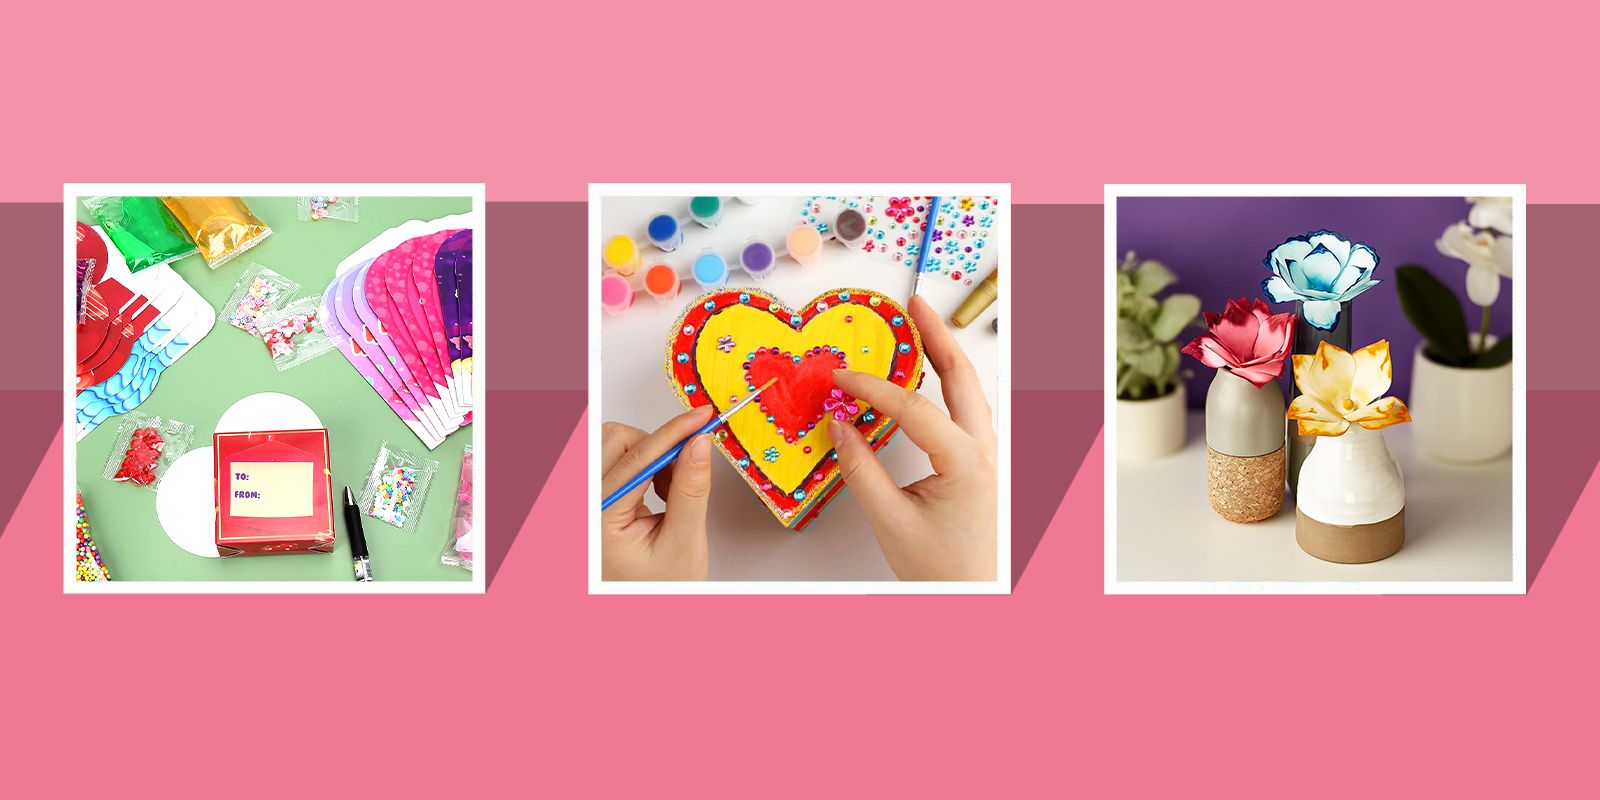 70 DIY Valentine's Day Gifts - Easy Homemade Valentine's Presents